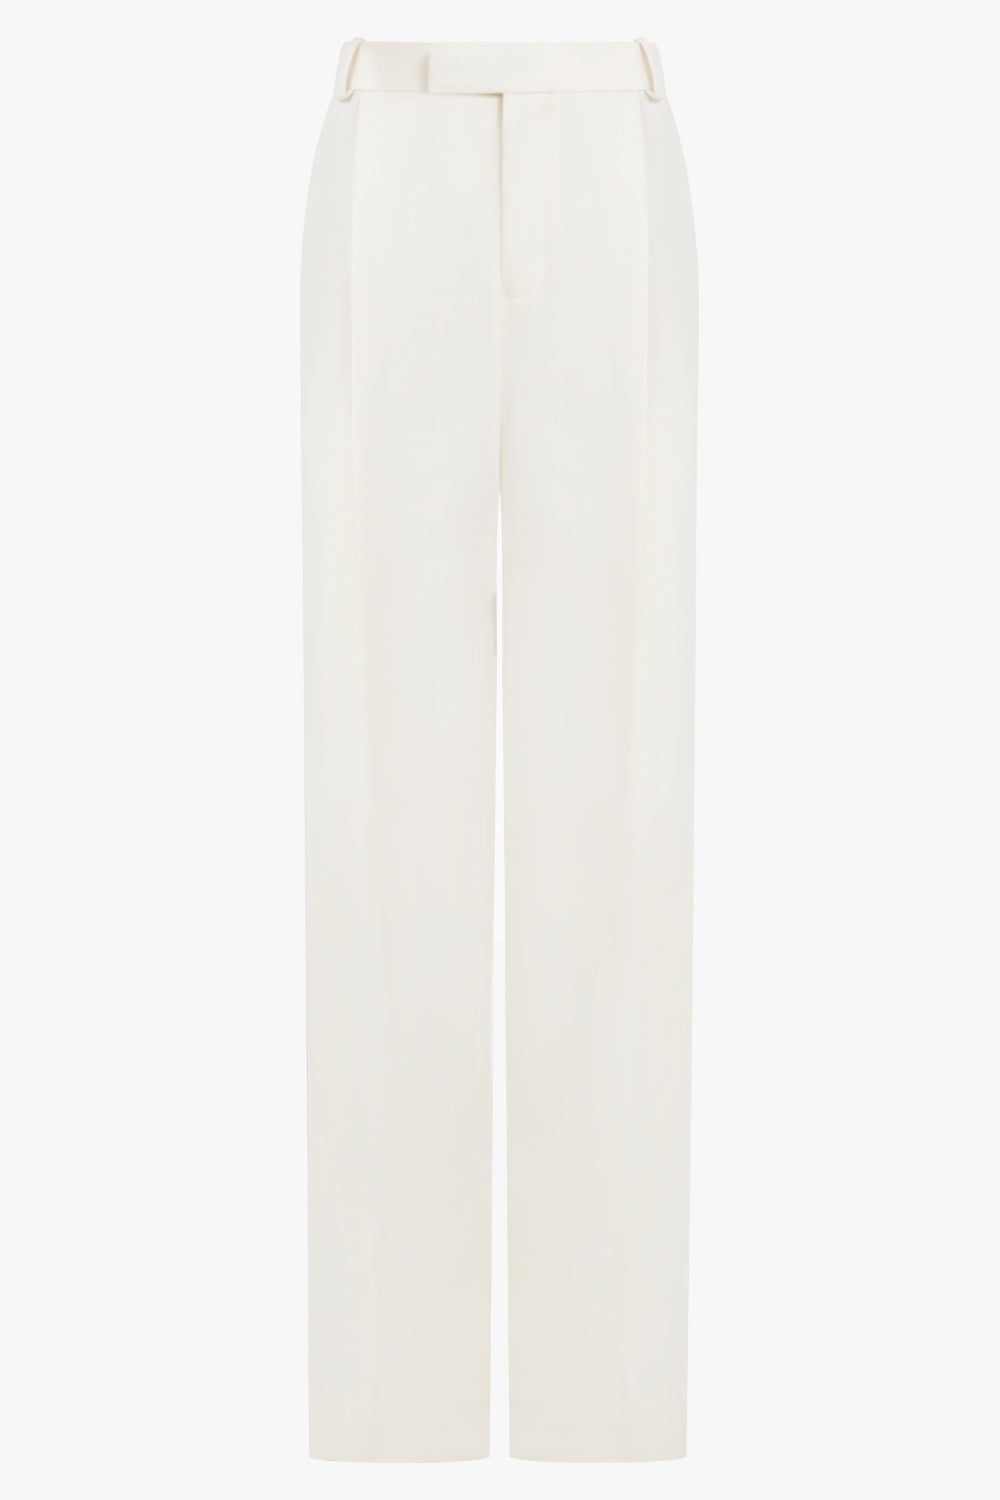 BITE STUDIOS RTW Ecole Flannel Pant | Off White